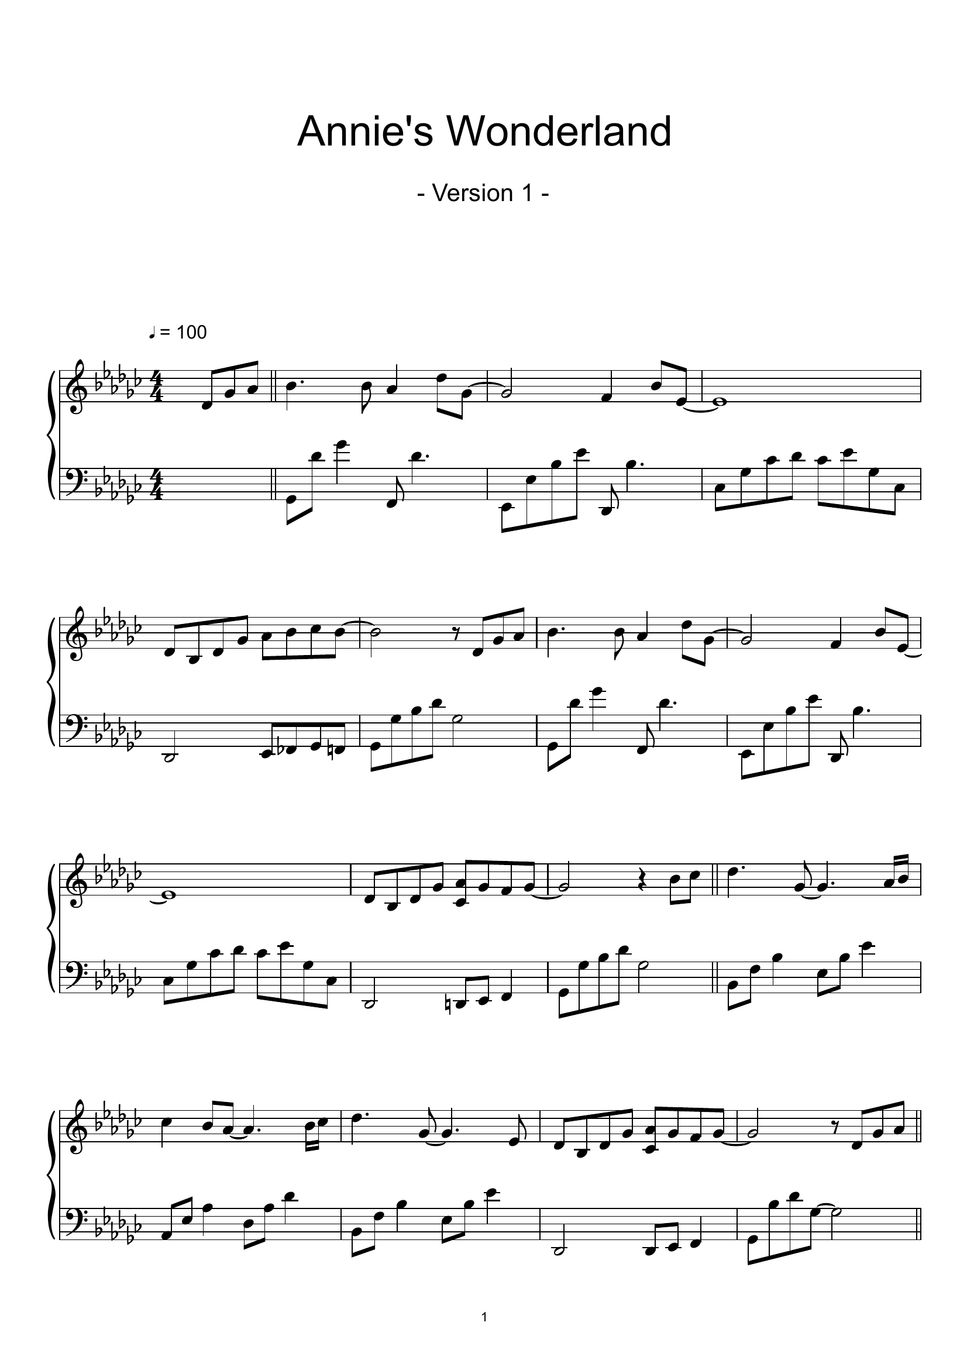 Bandari - Annie's Wonderland (Version 1 and Version 2) (Sheet Music, MIDI,) by sayu